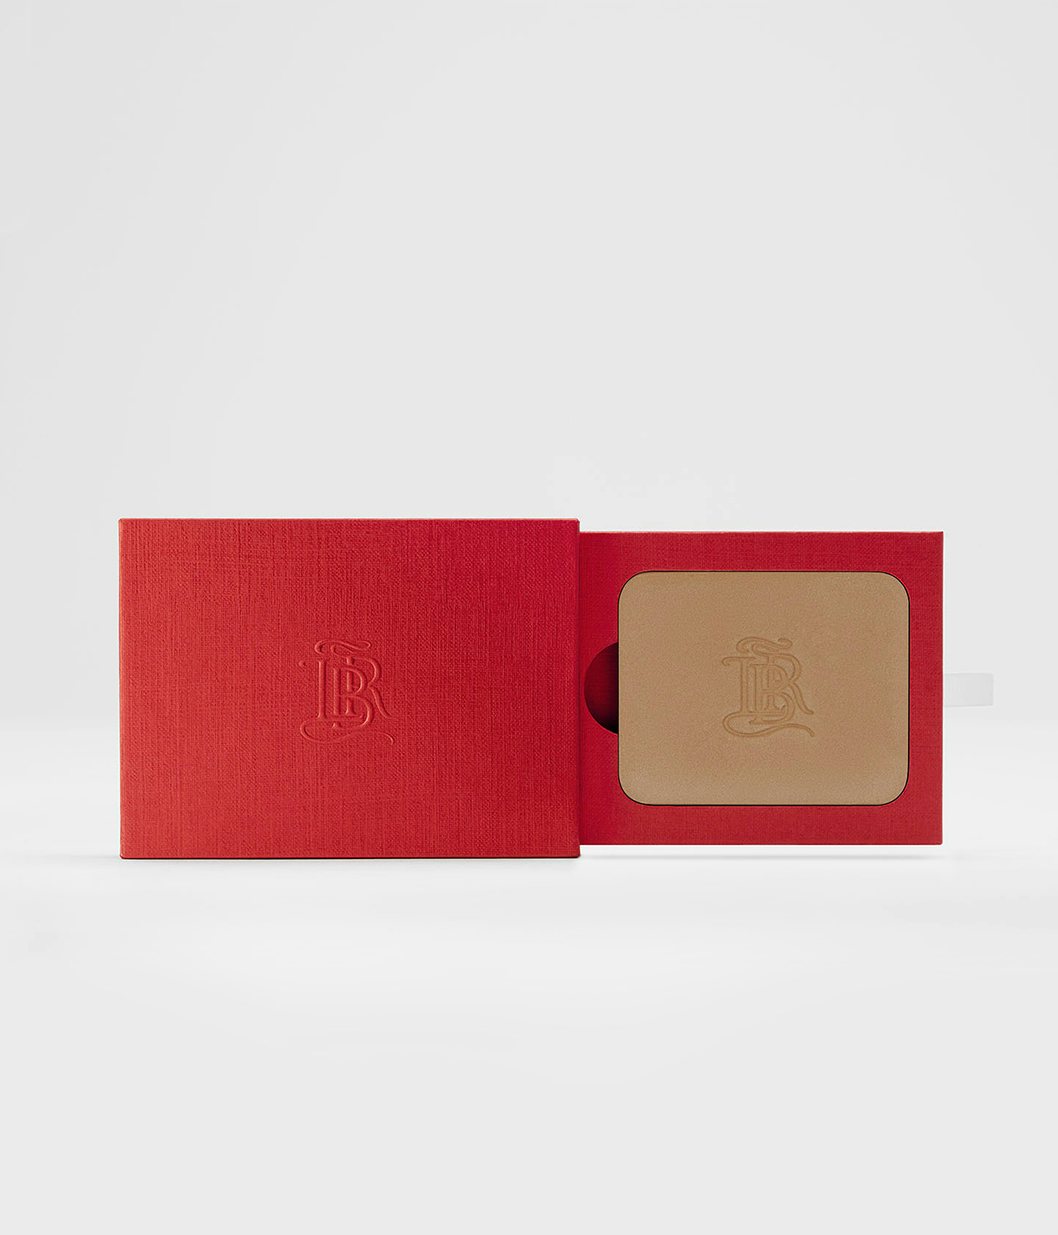 La bouche rouge La Terre Brune bronzer in the red paper case